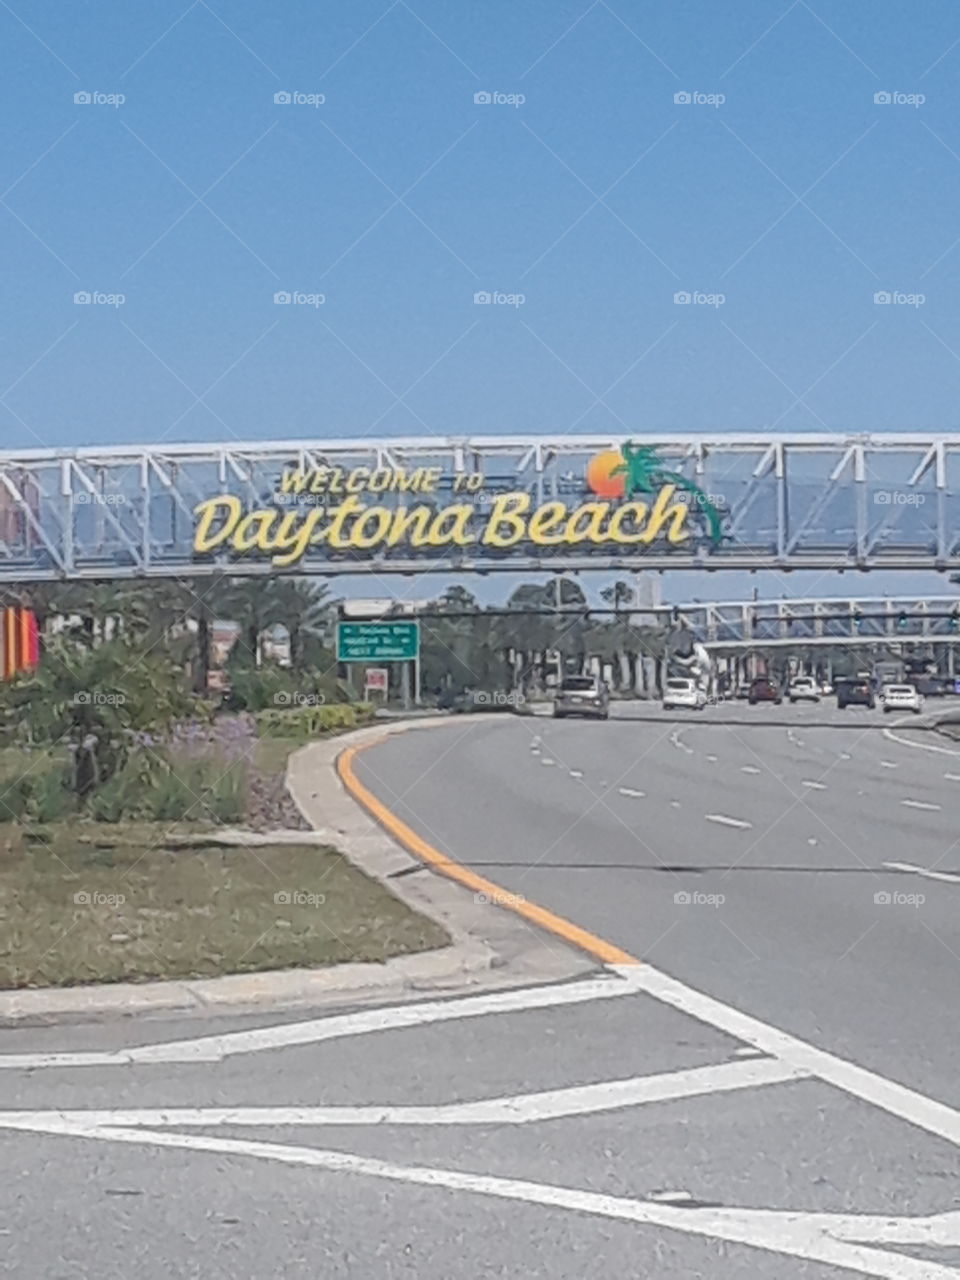 Welcome to Daytona